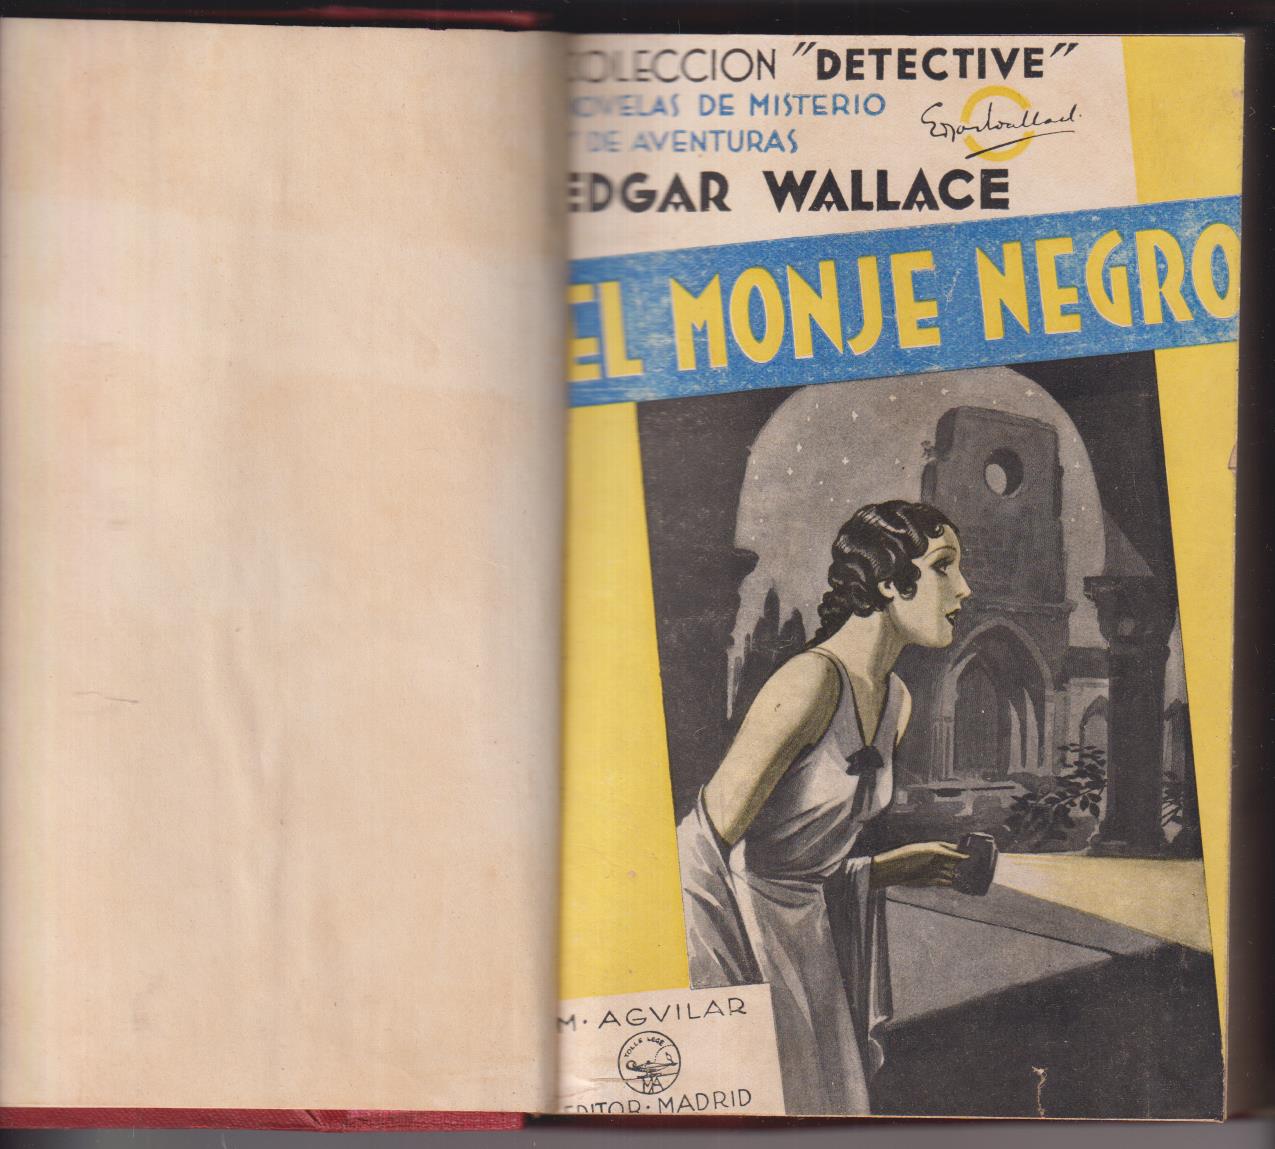 Edgar Wallace. El monje negro. Editorial Aguilar 1932.